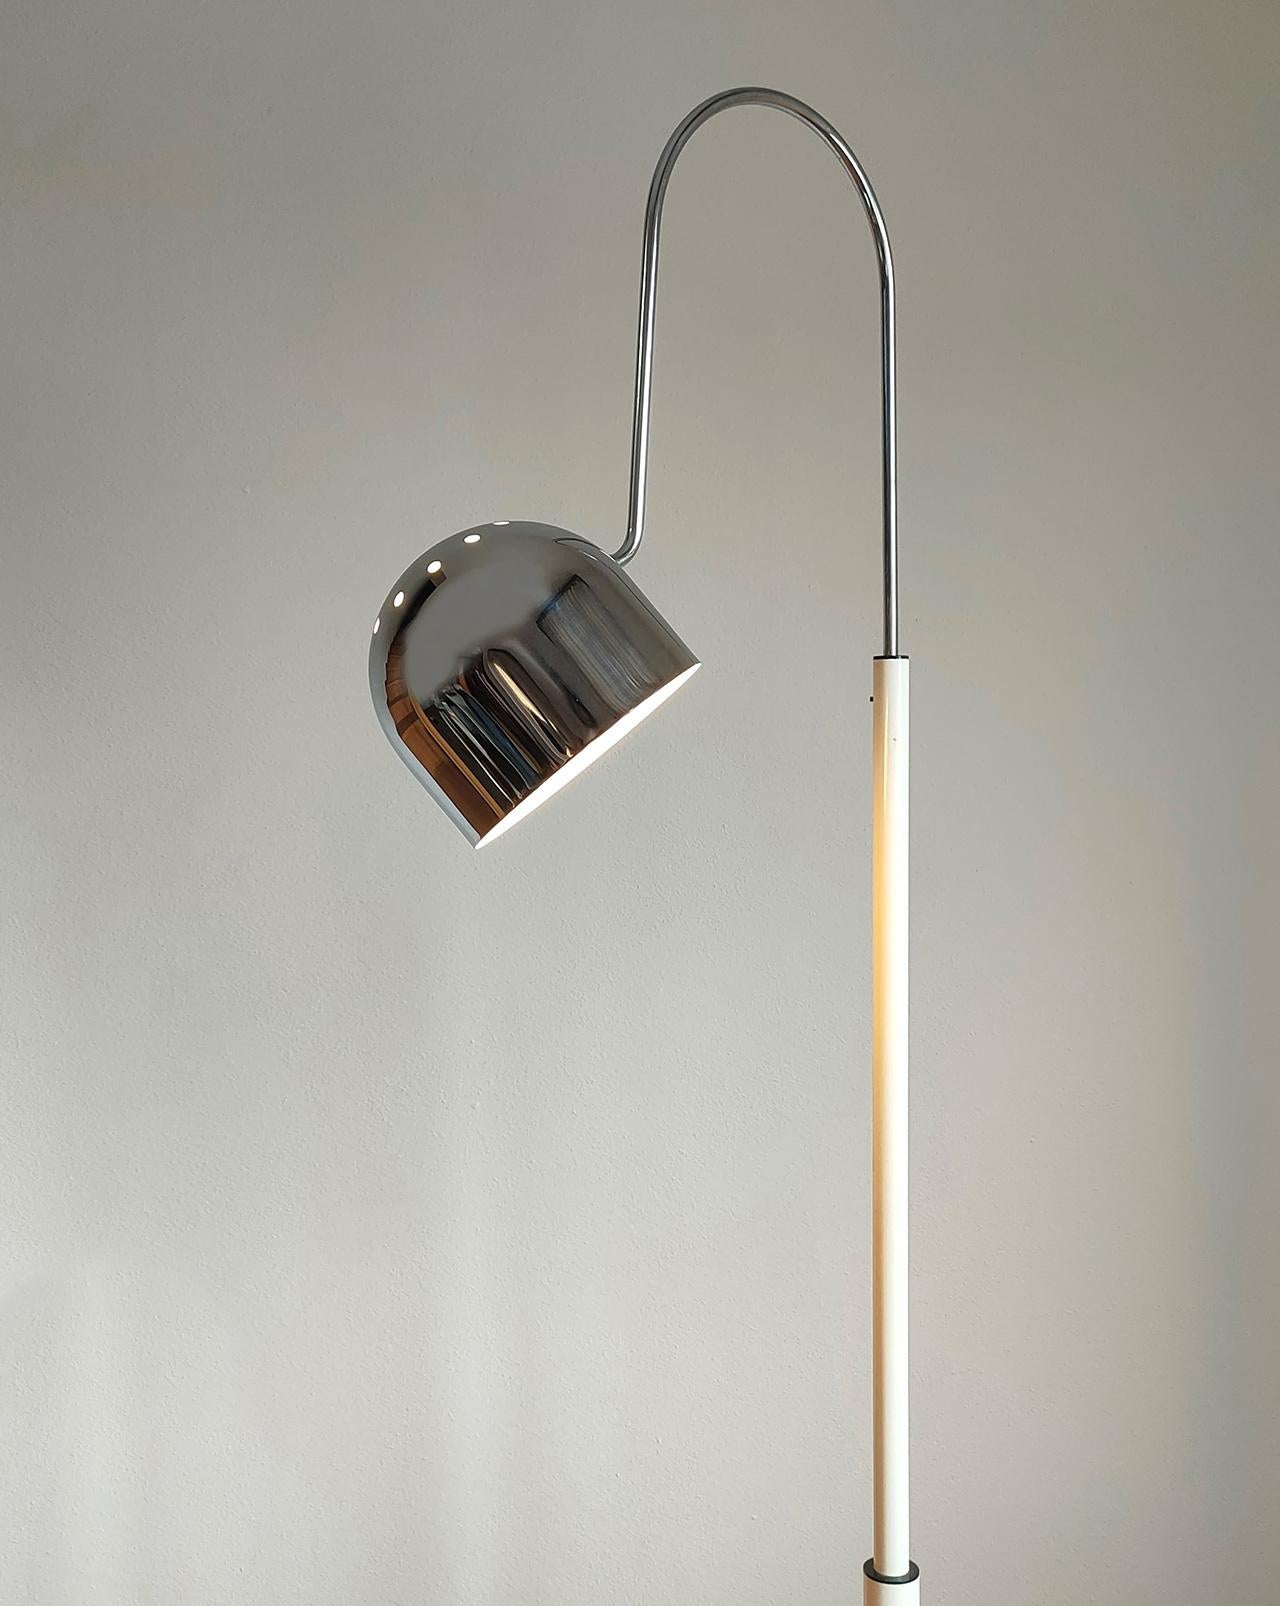 Lacquered Danilo & Corrado Aroldi Bridge Floor Lamp in Metal by Stilnovo 1970s Italy  For Sale